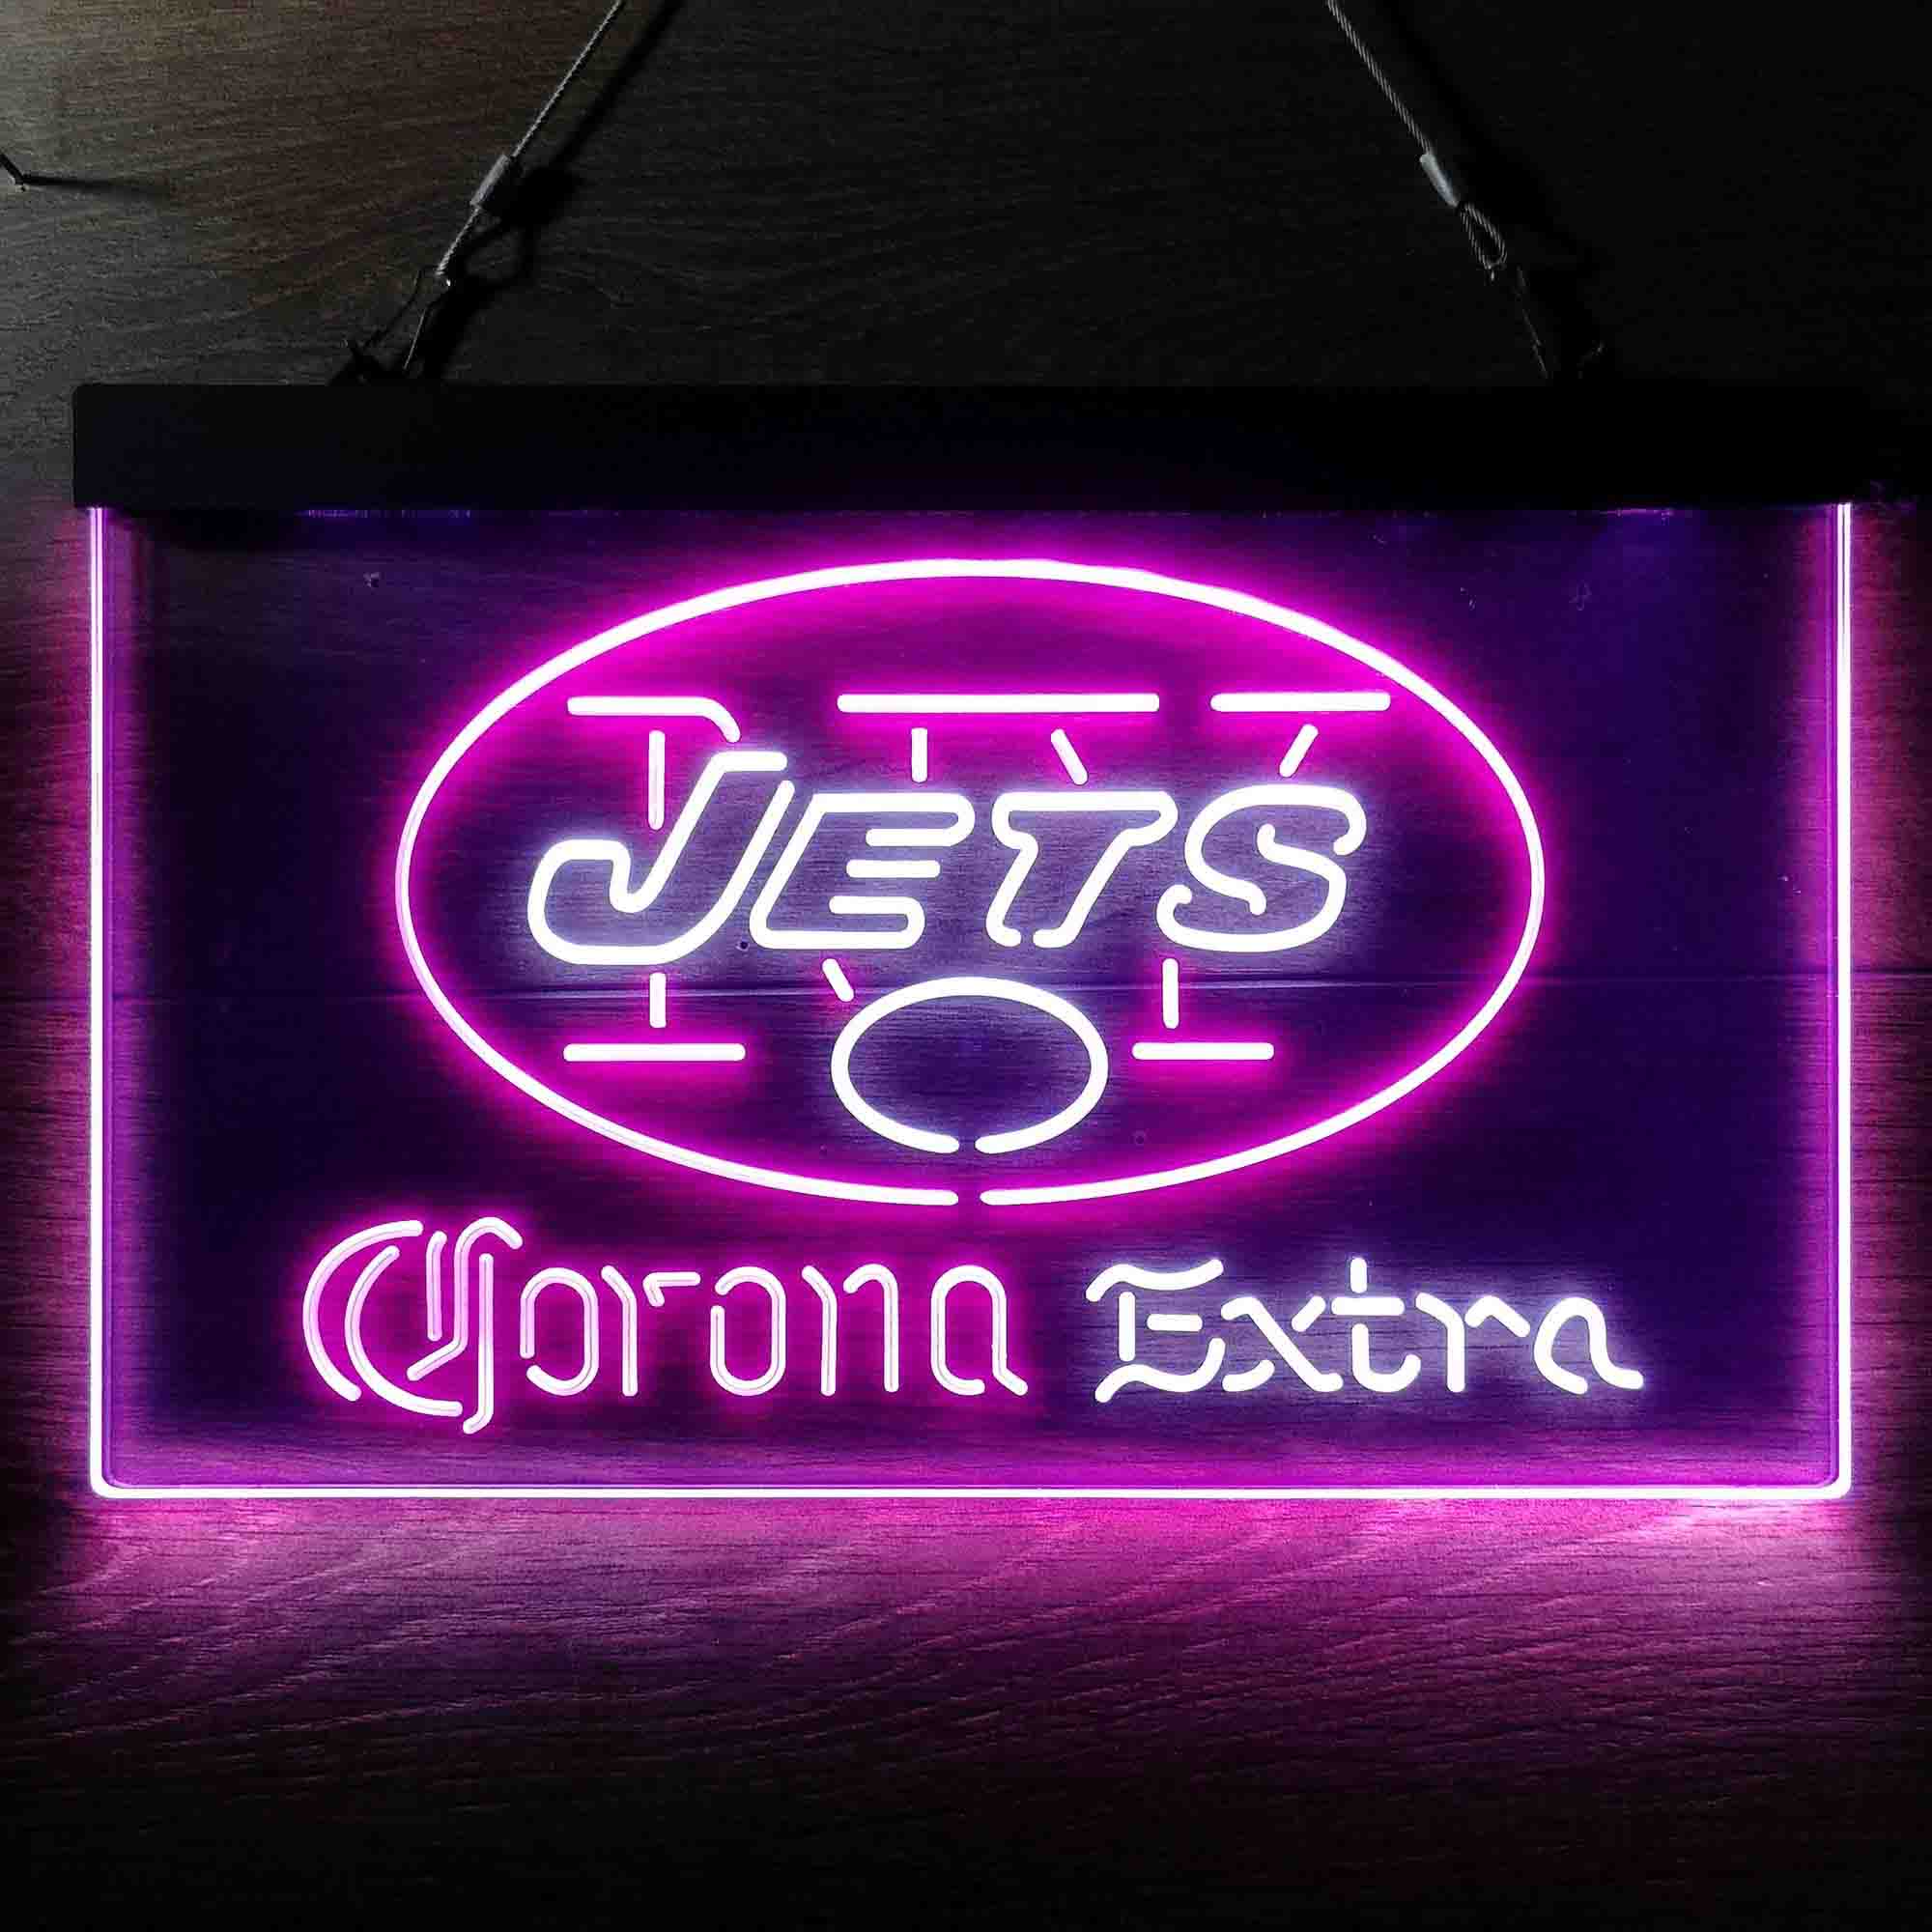 Corona Extra Bar New York Jets Est. 1960 Neon-Like LED Sign